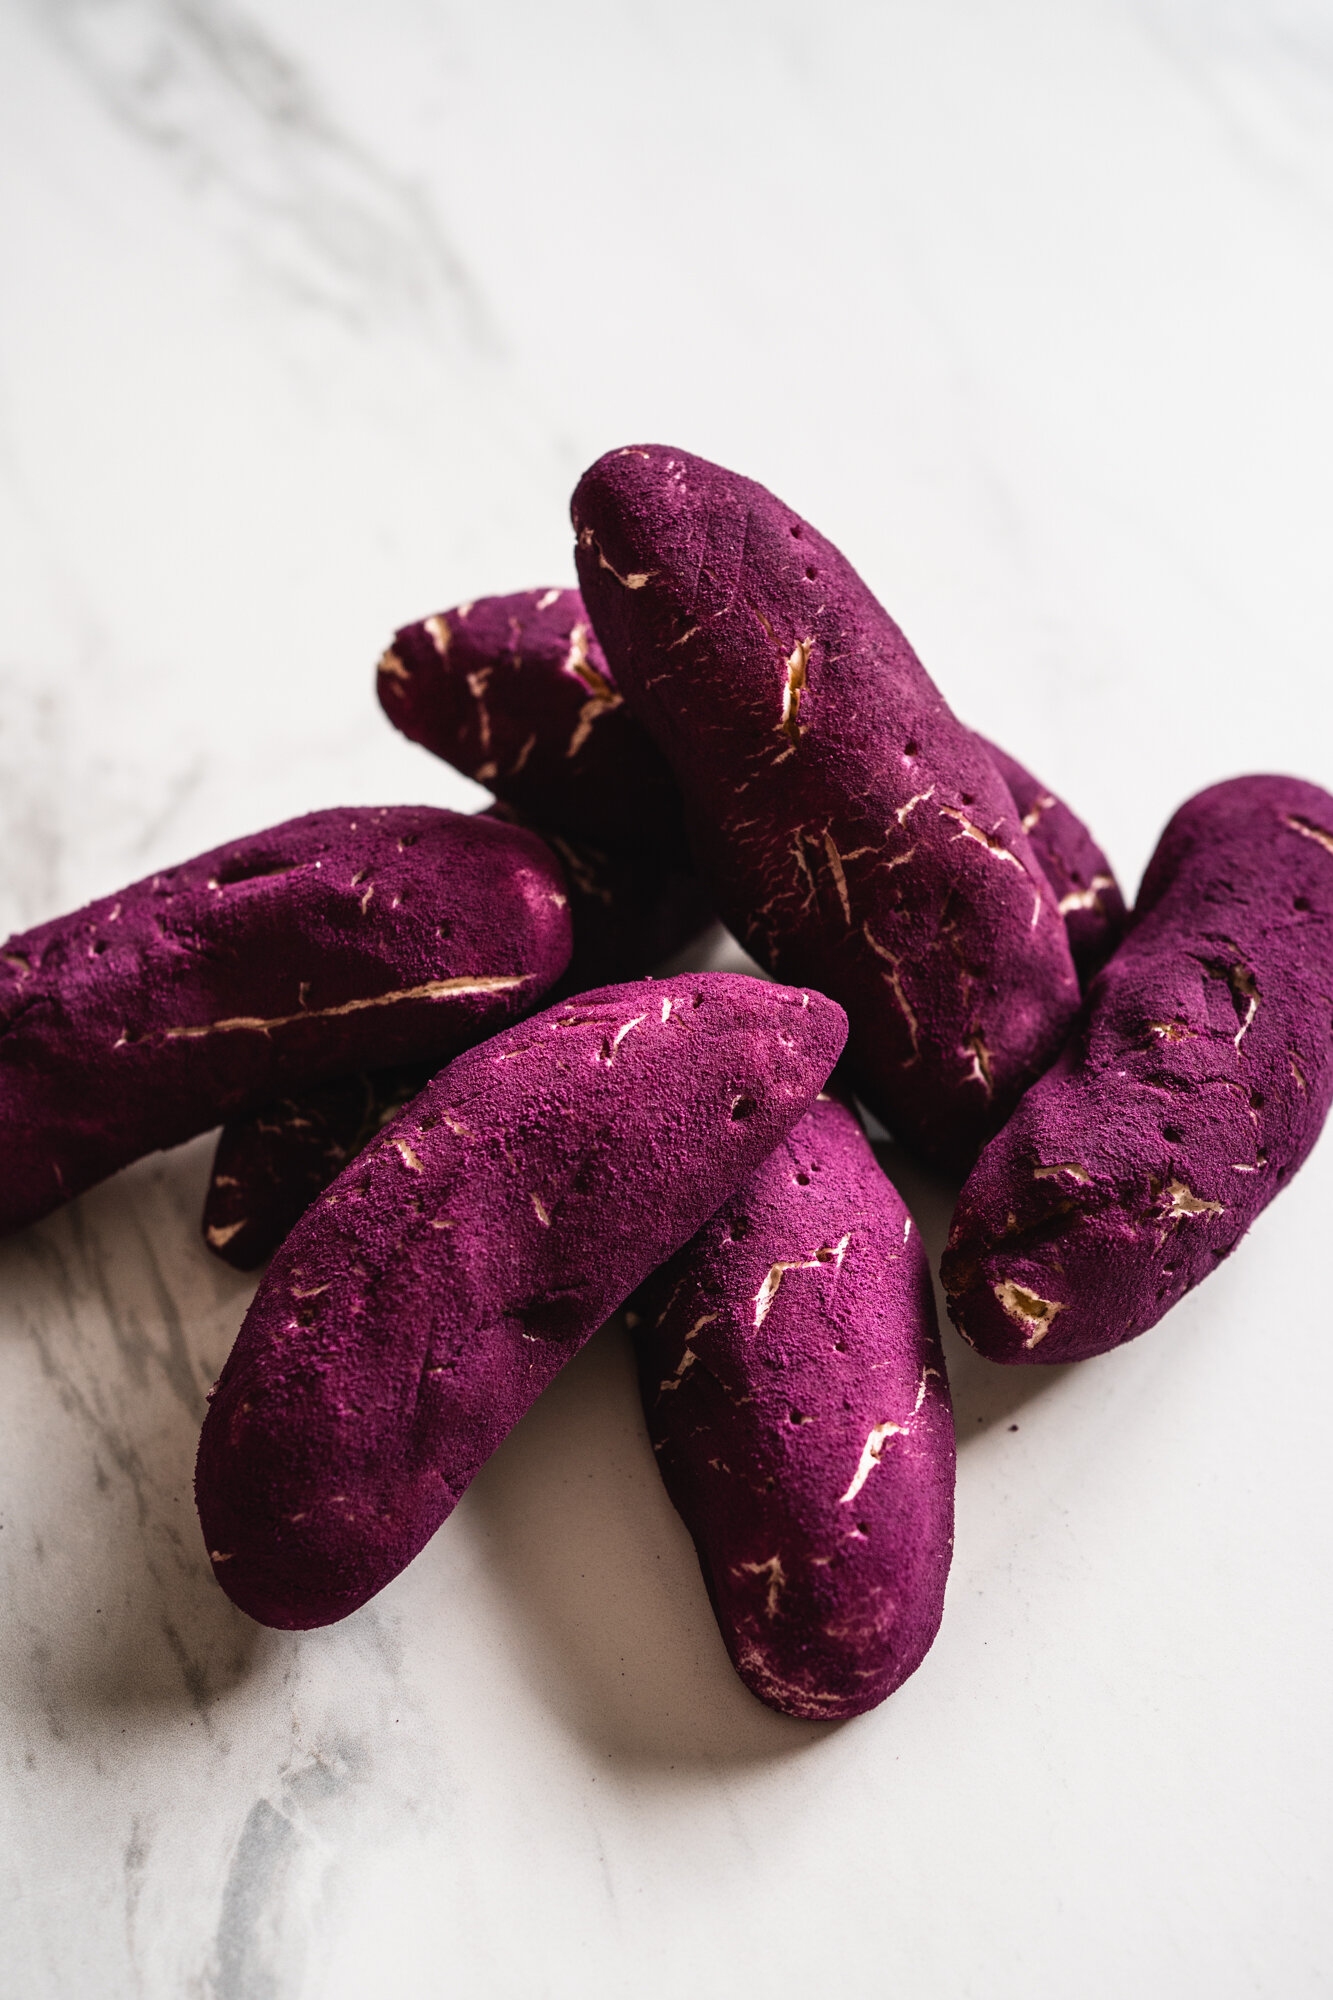 Purple Sweet Potatoes: Are They The Secret to Longevity?